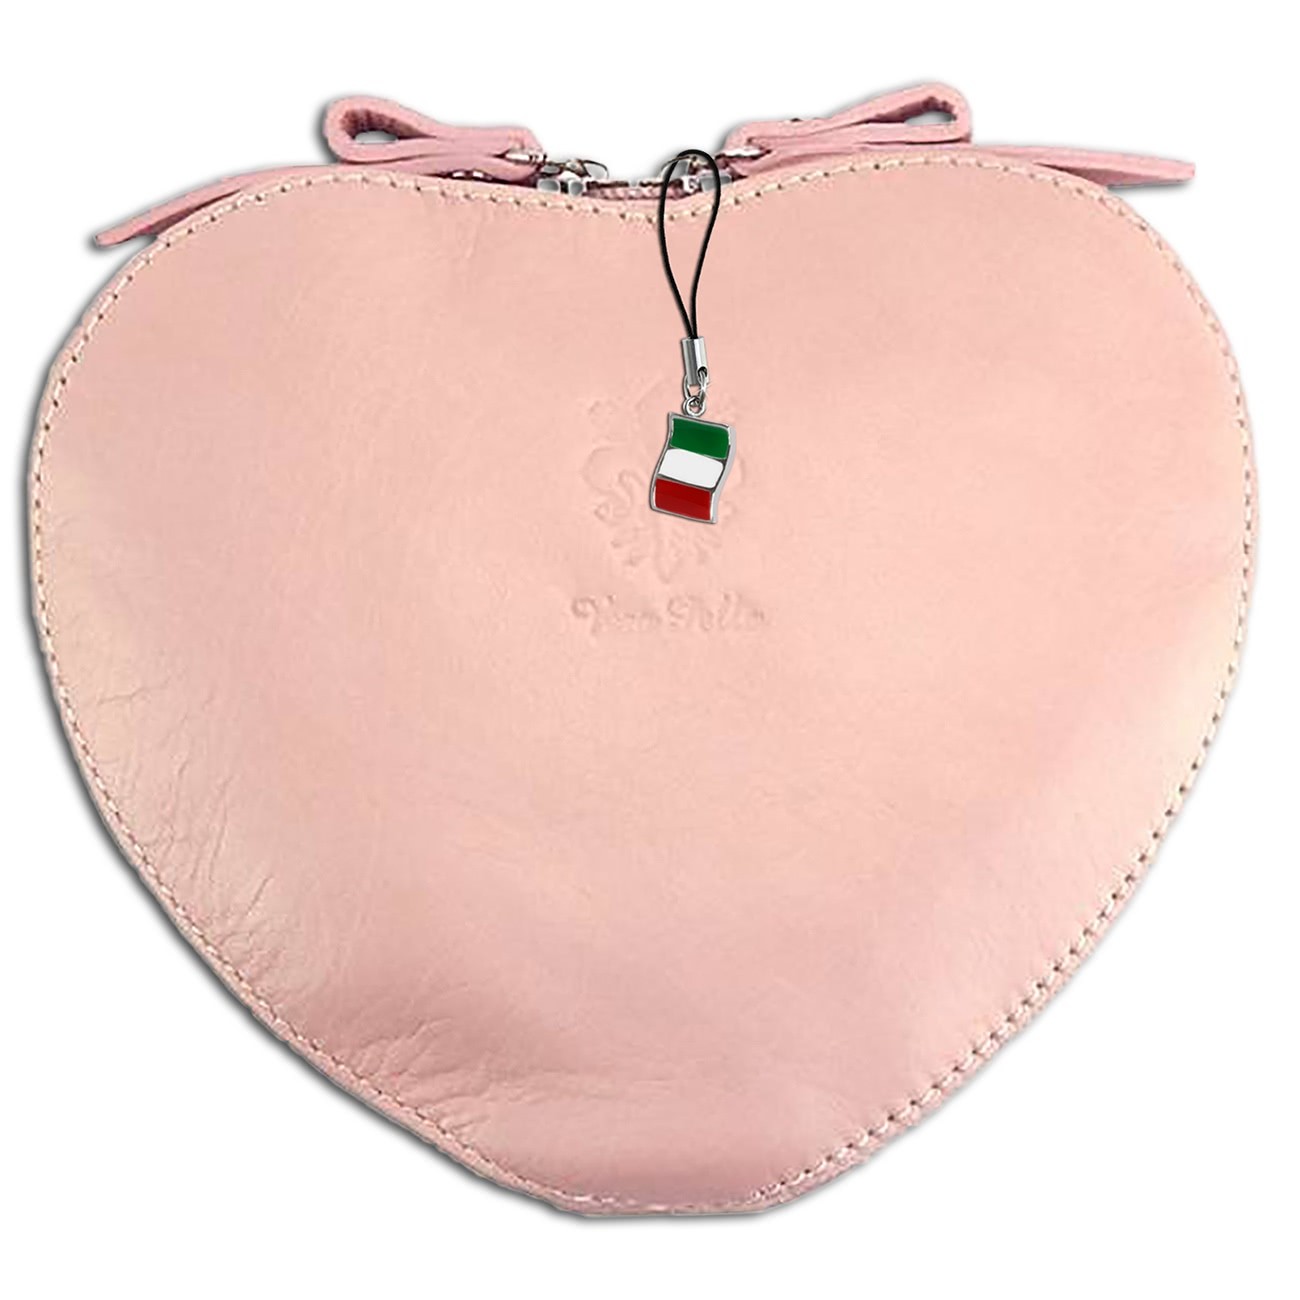 Florence herzförmige Damen Schultertasche echtes Leder Handtasche rosa OTF121A